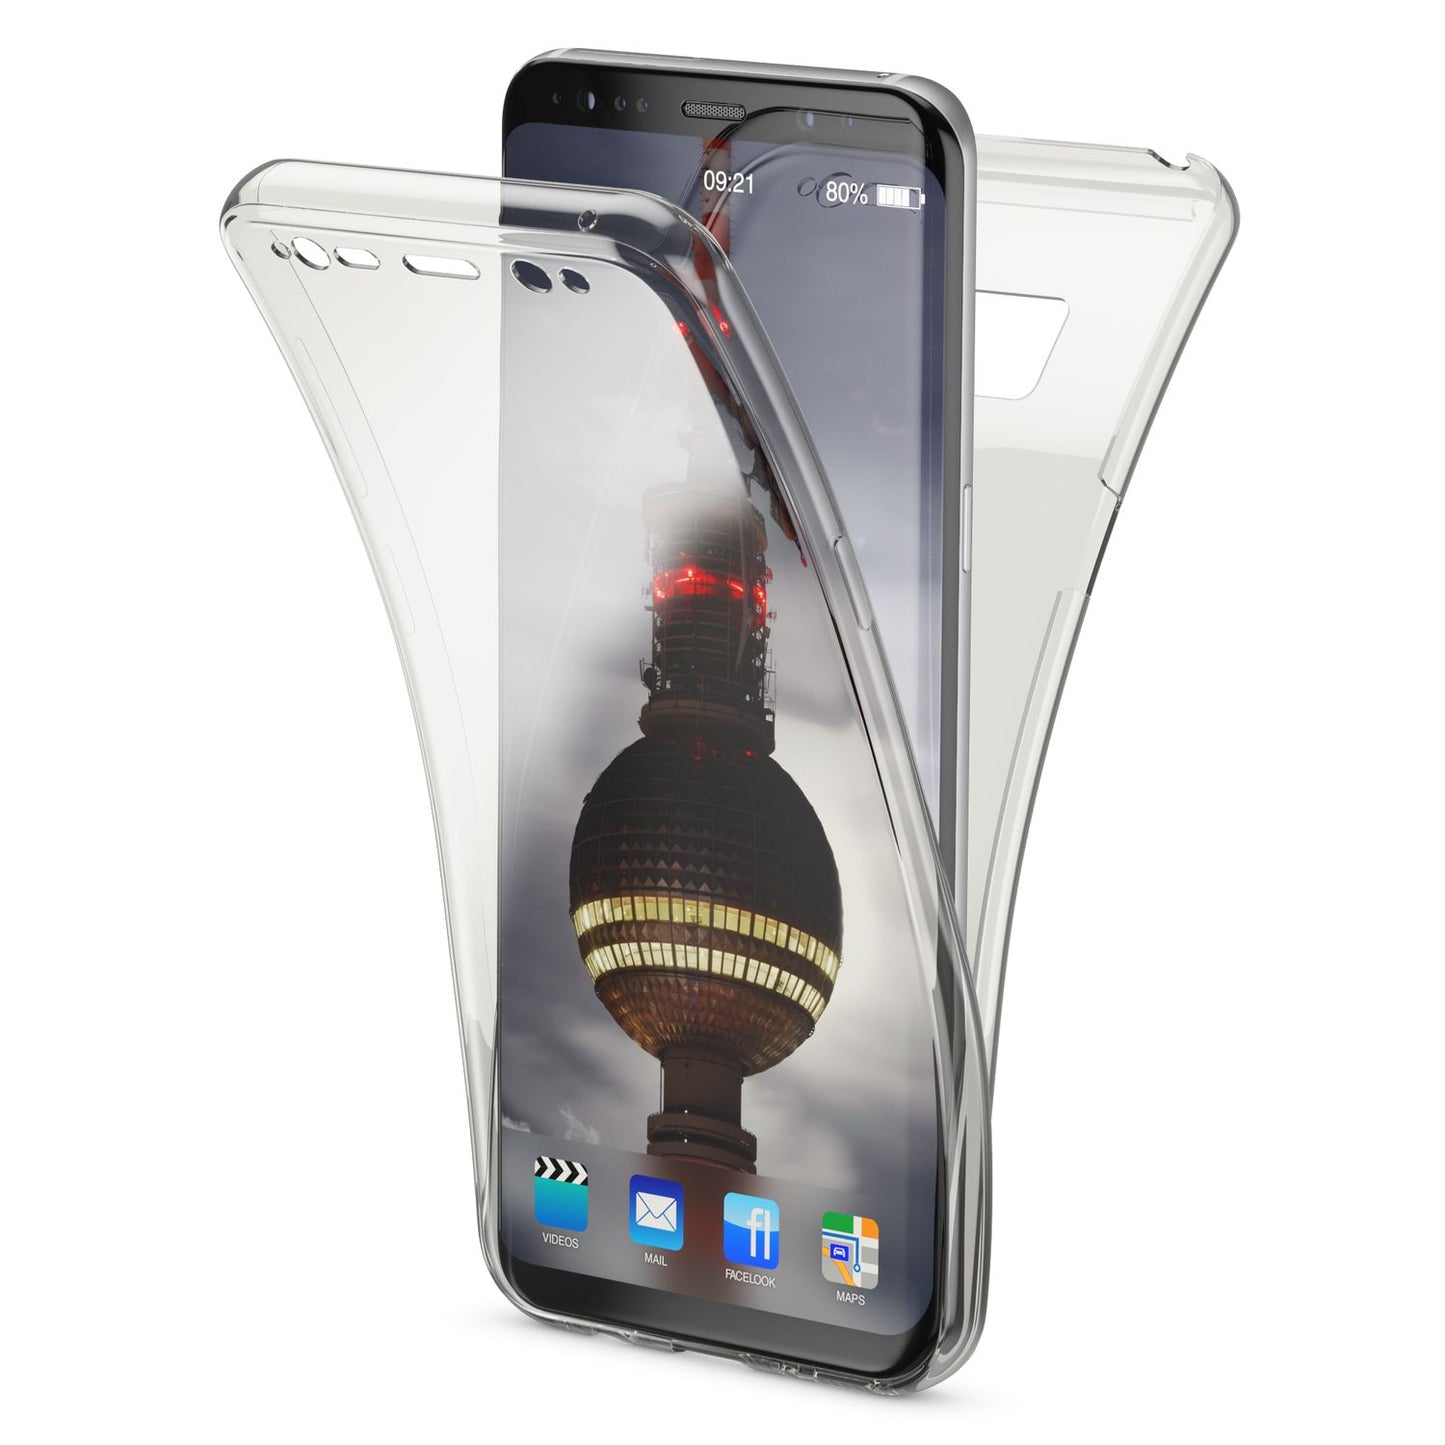 NALIA 360 Grad Hülle für Samsung Galaxy S8 Plus, Full Cover Rundum Doppel Schutz